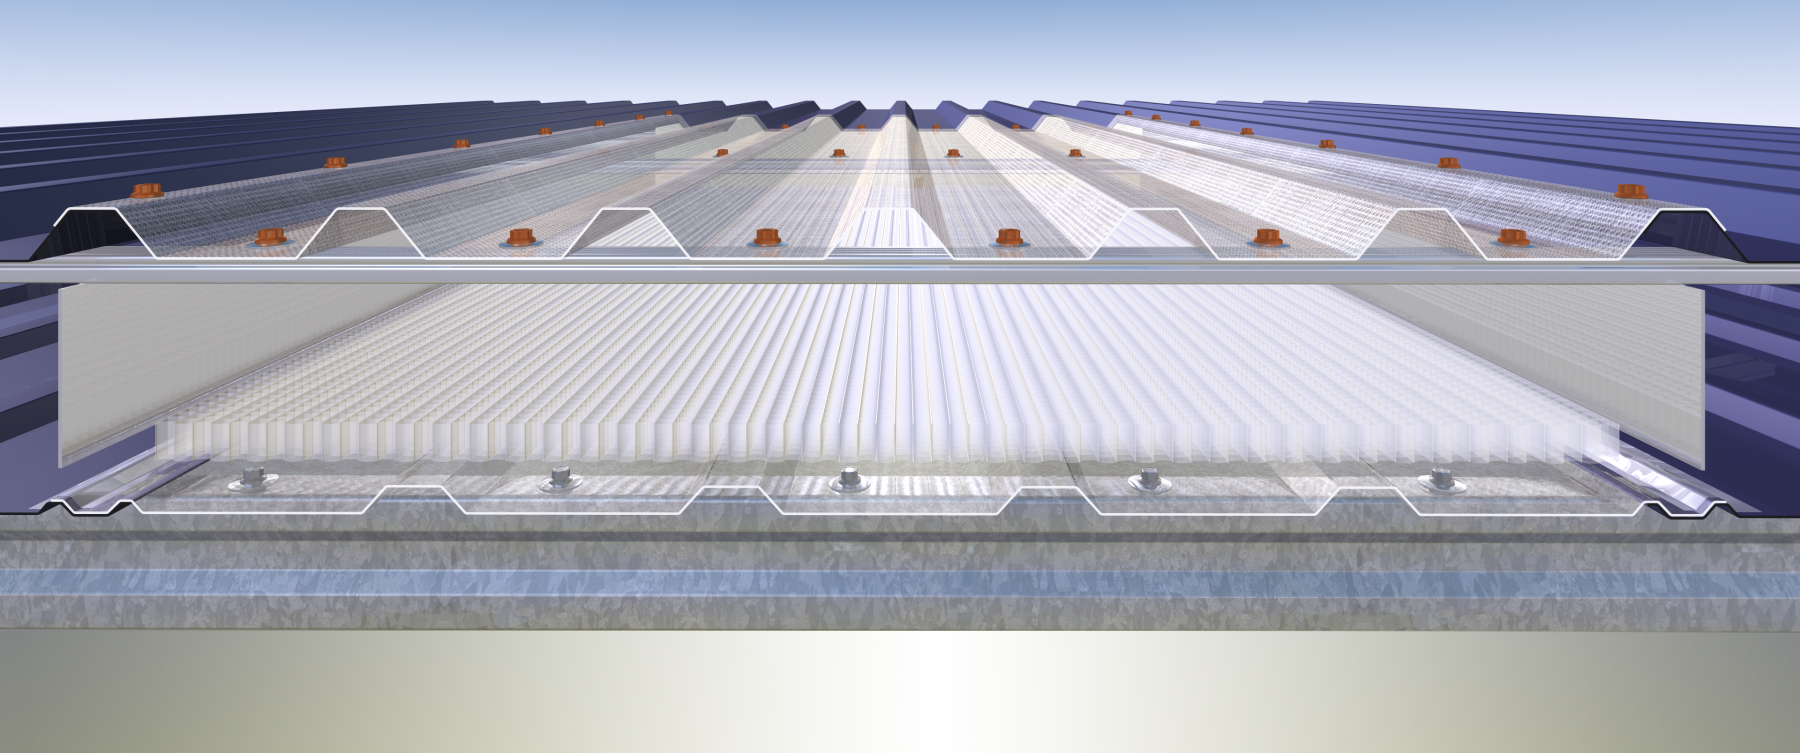 Hambleside Danelaw external rooflights on commercial warehouse in wigan